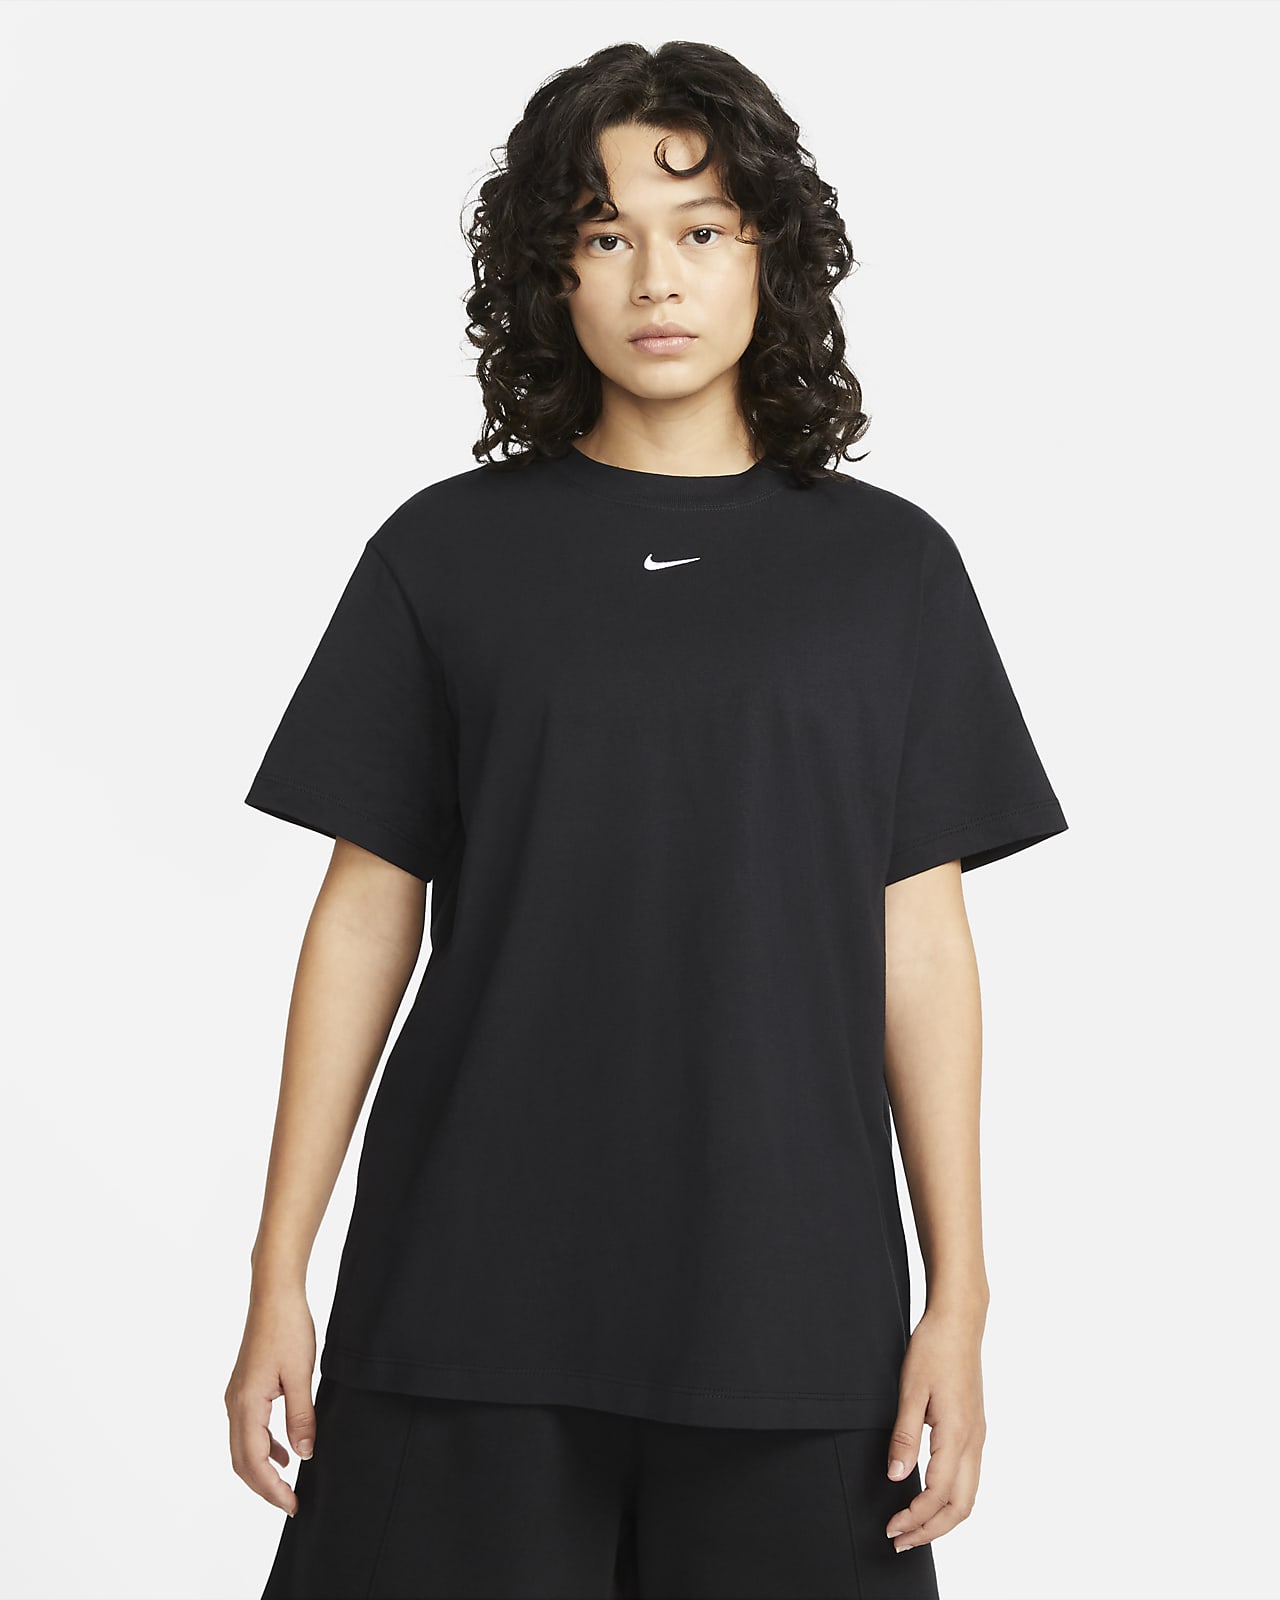 Tee-shirt Nike Sportswear Essentials pour Femme